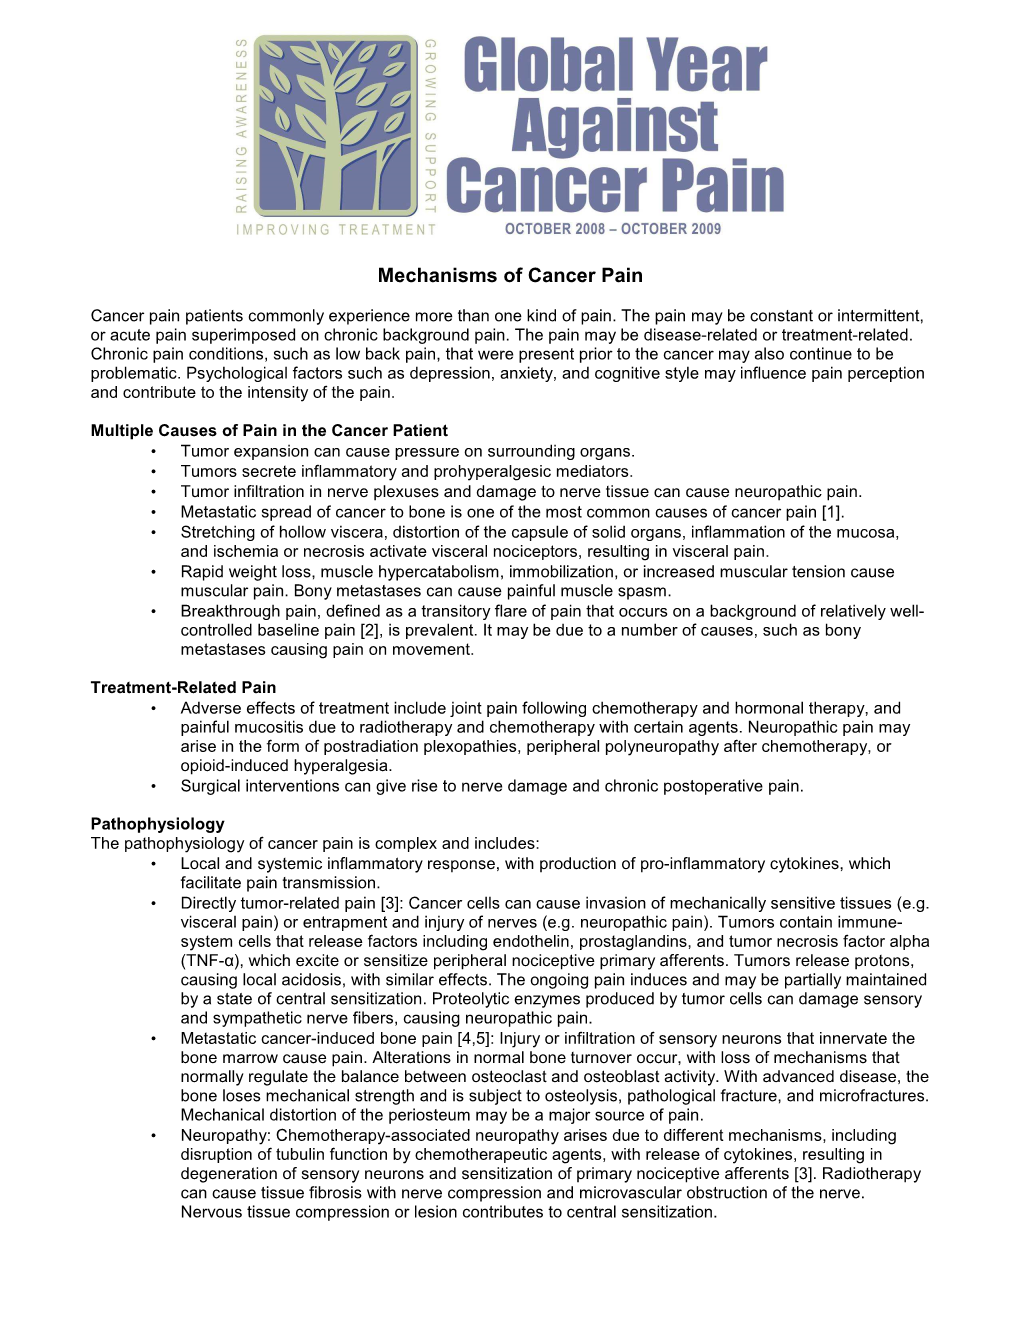 Mechanisms of Cancer Pain